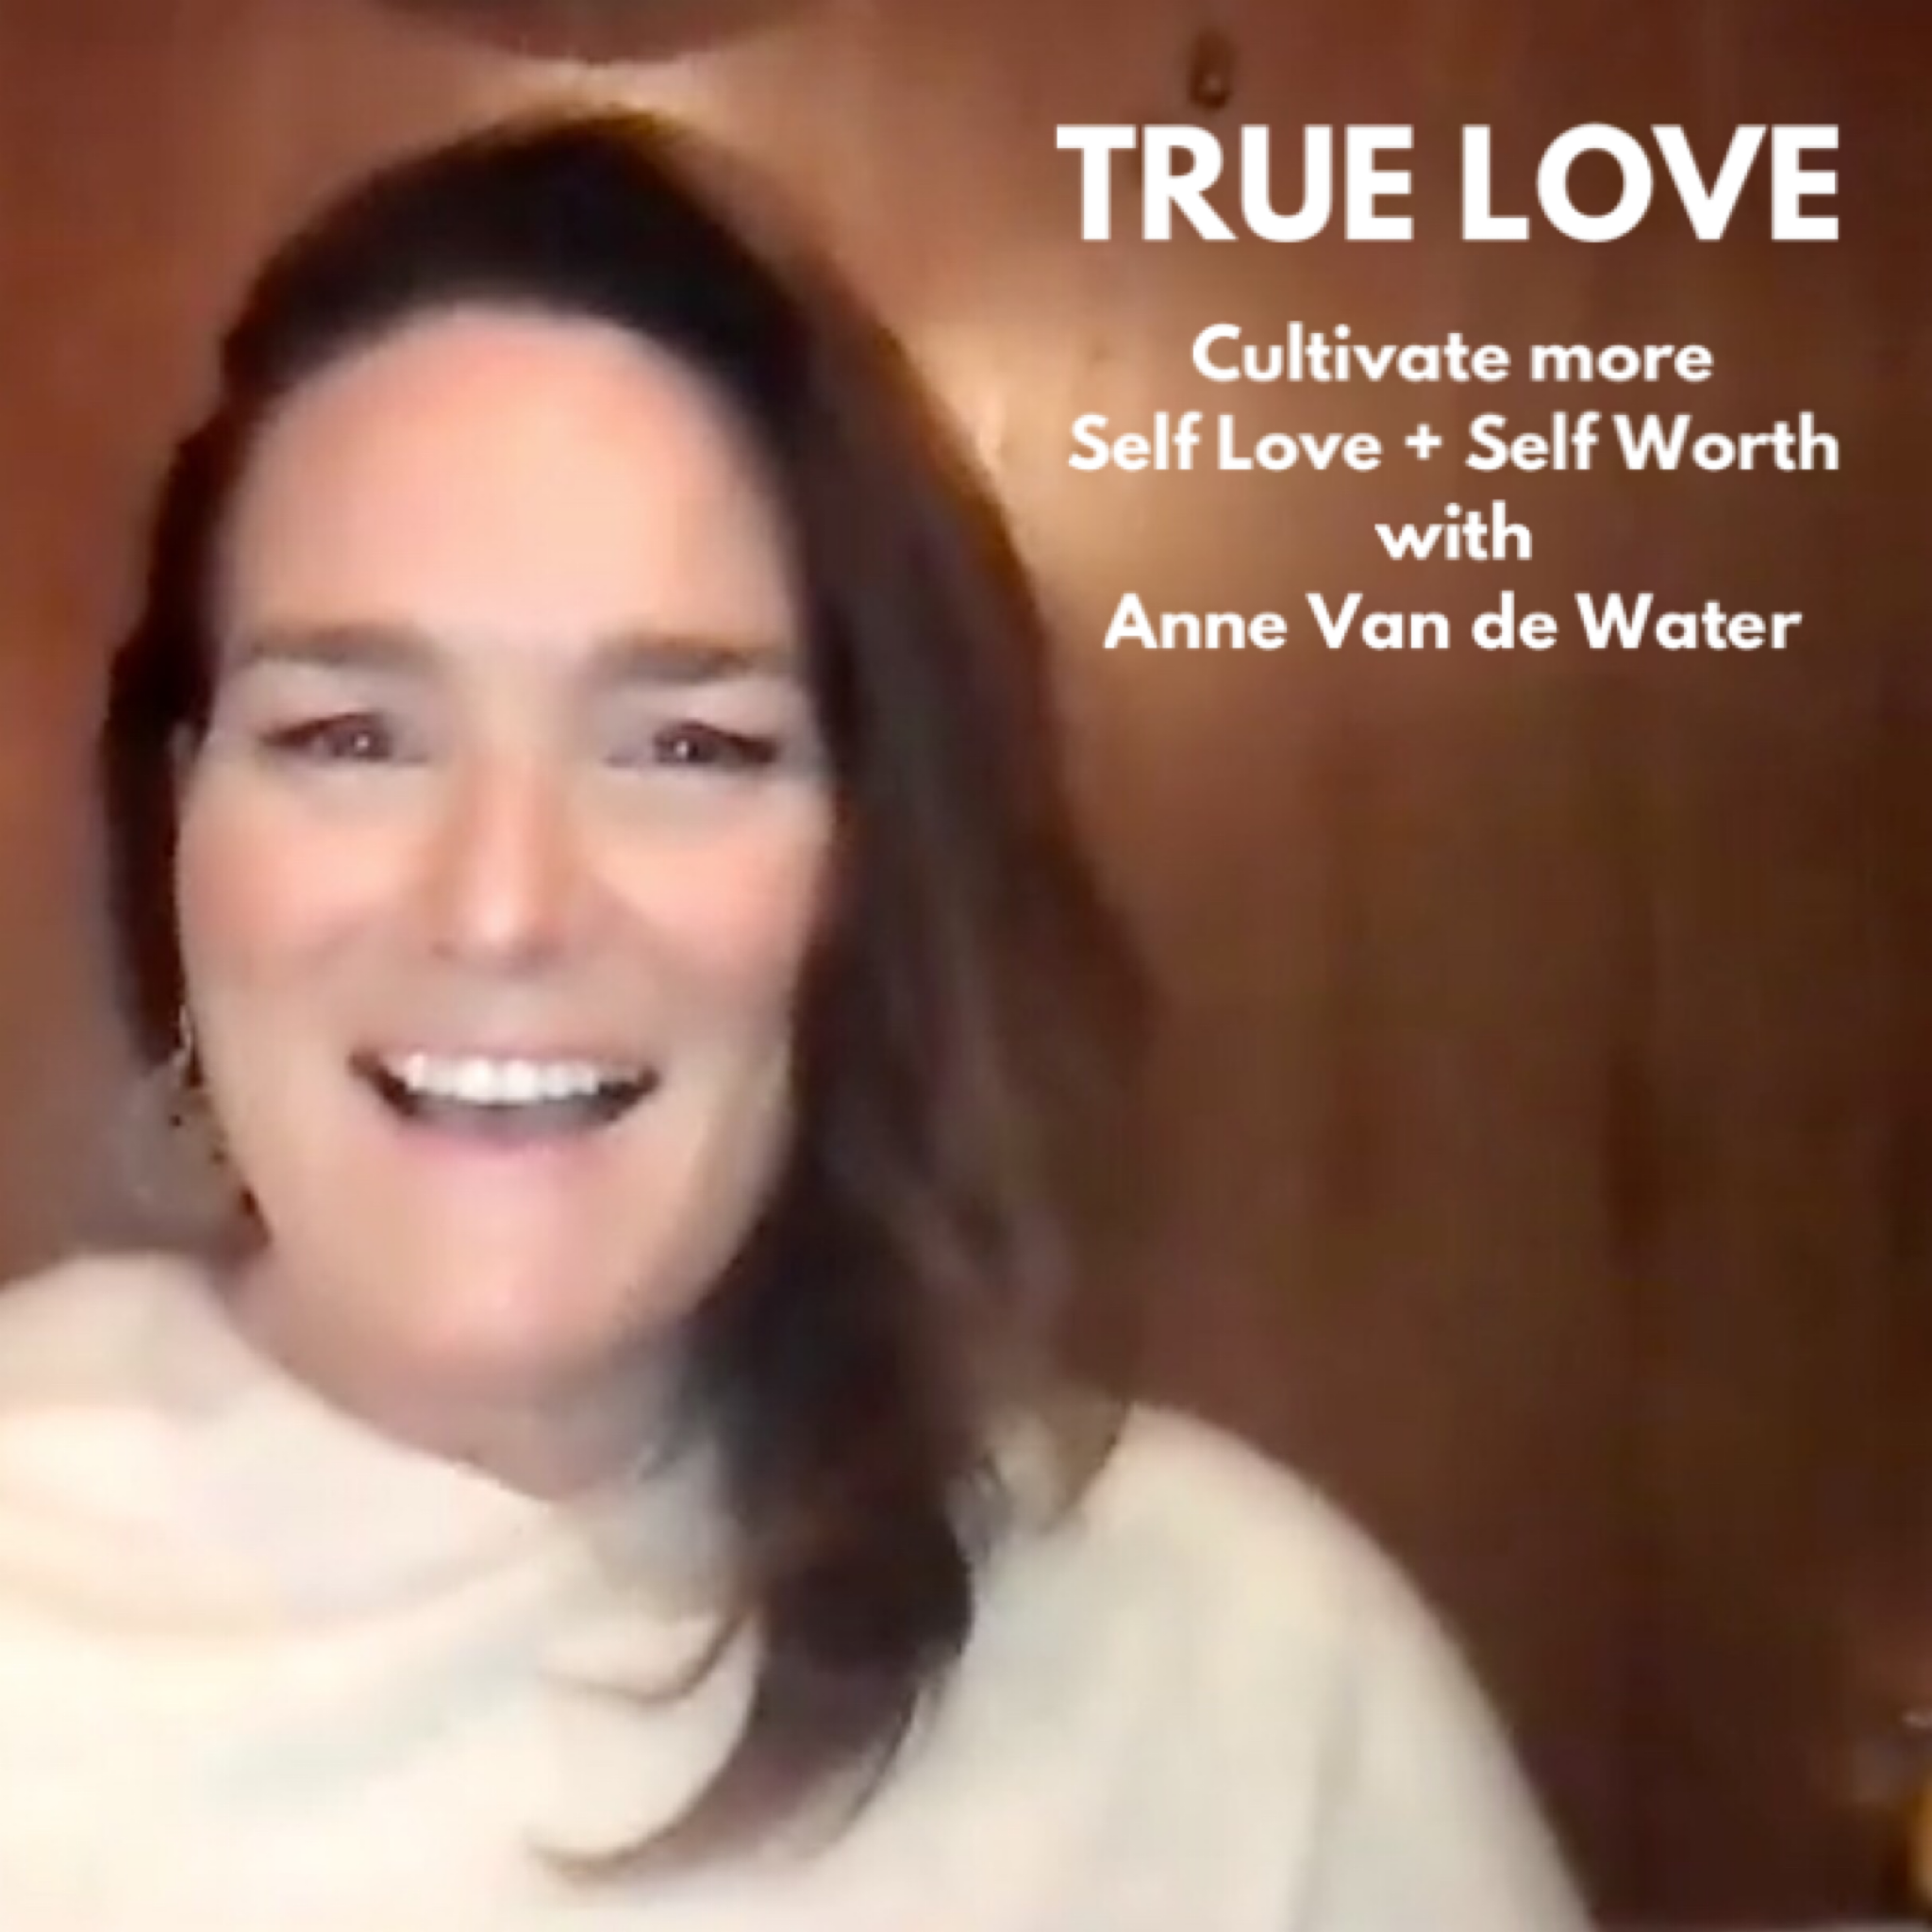 TRUE LOVE - Self Love and Self Worth